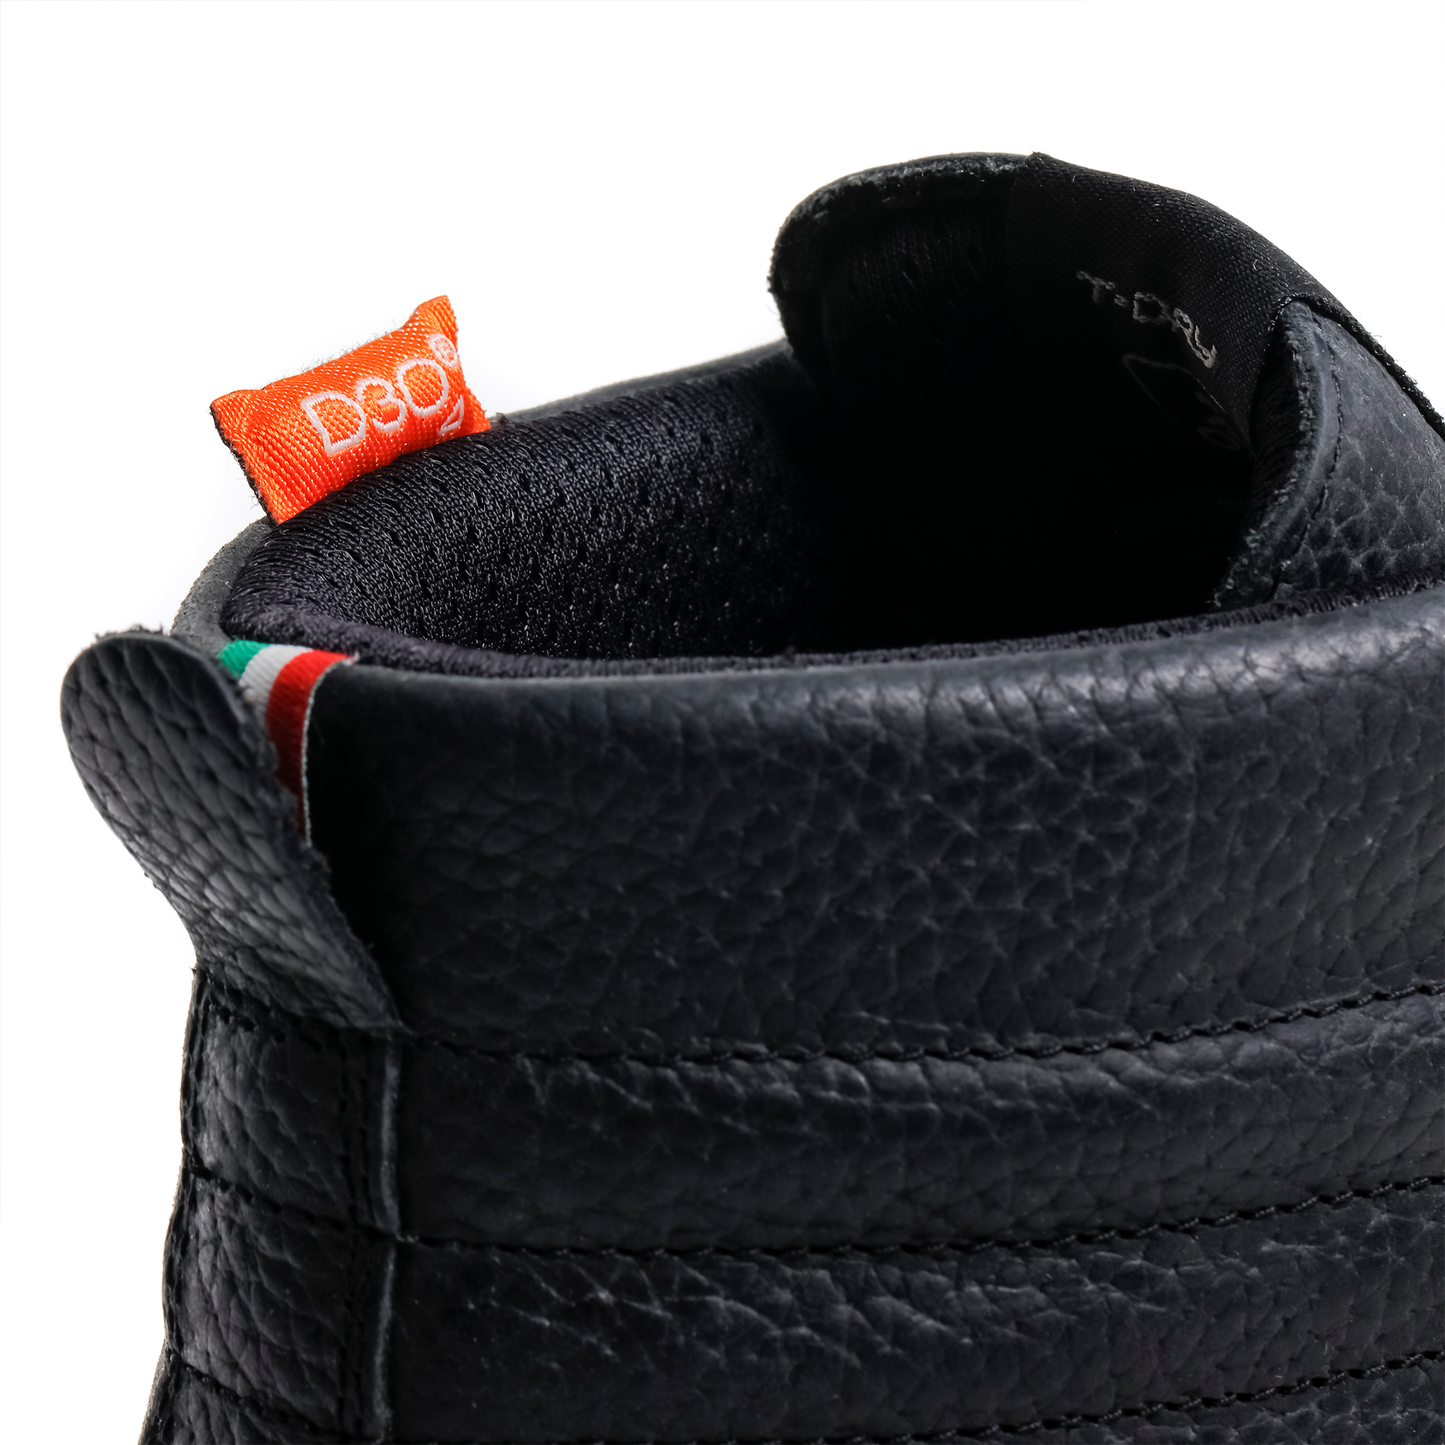 TCX Street 3 Waterproof Boots - Black/Black/White 948